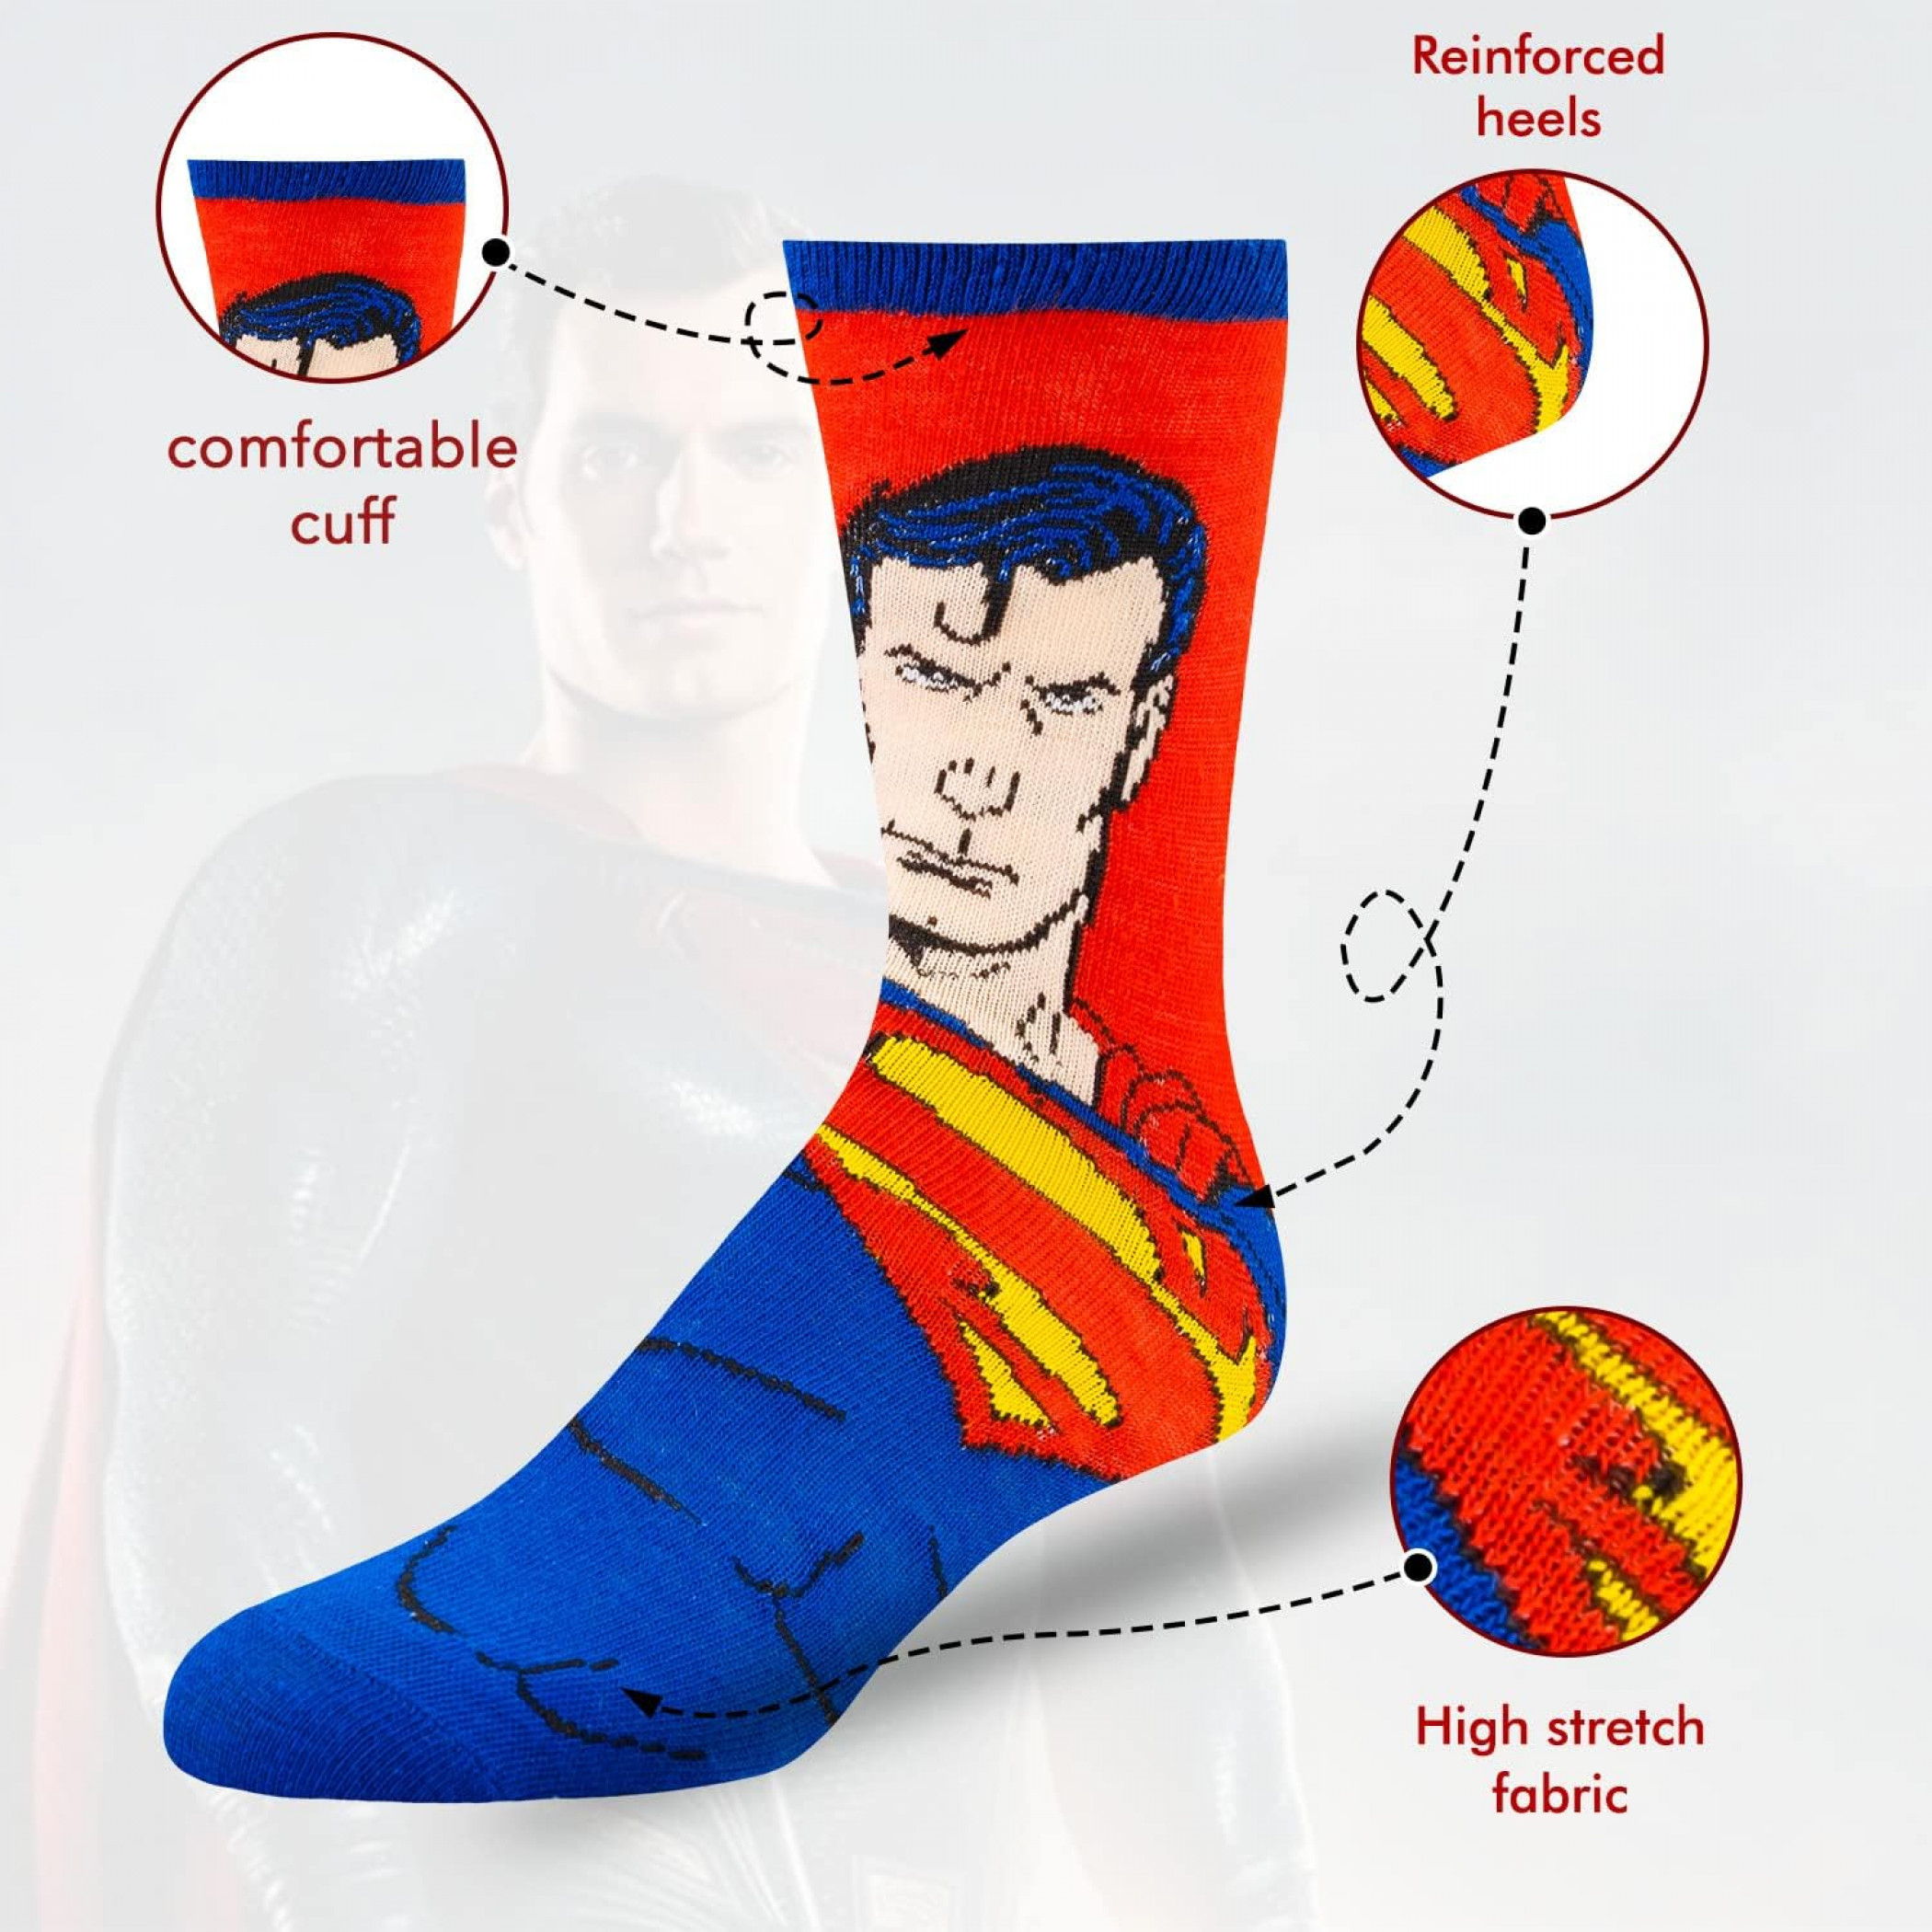 Superman Assorted Designs Men's Crew Socks 6-Pack